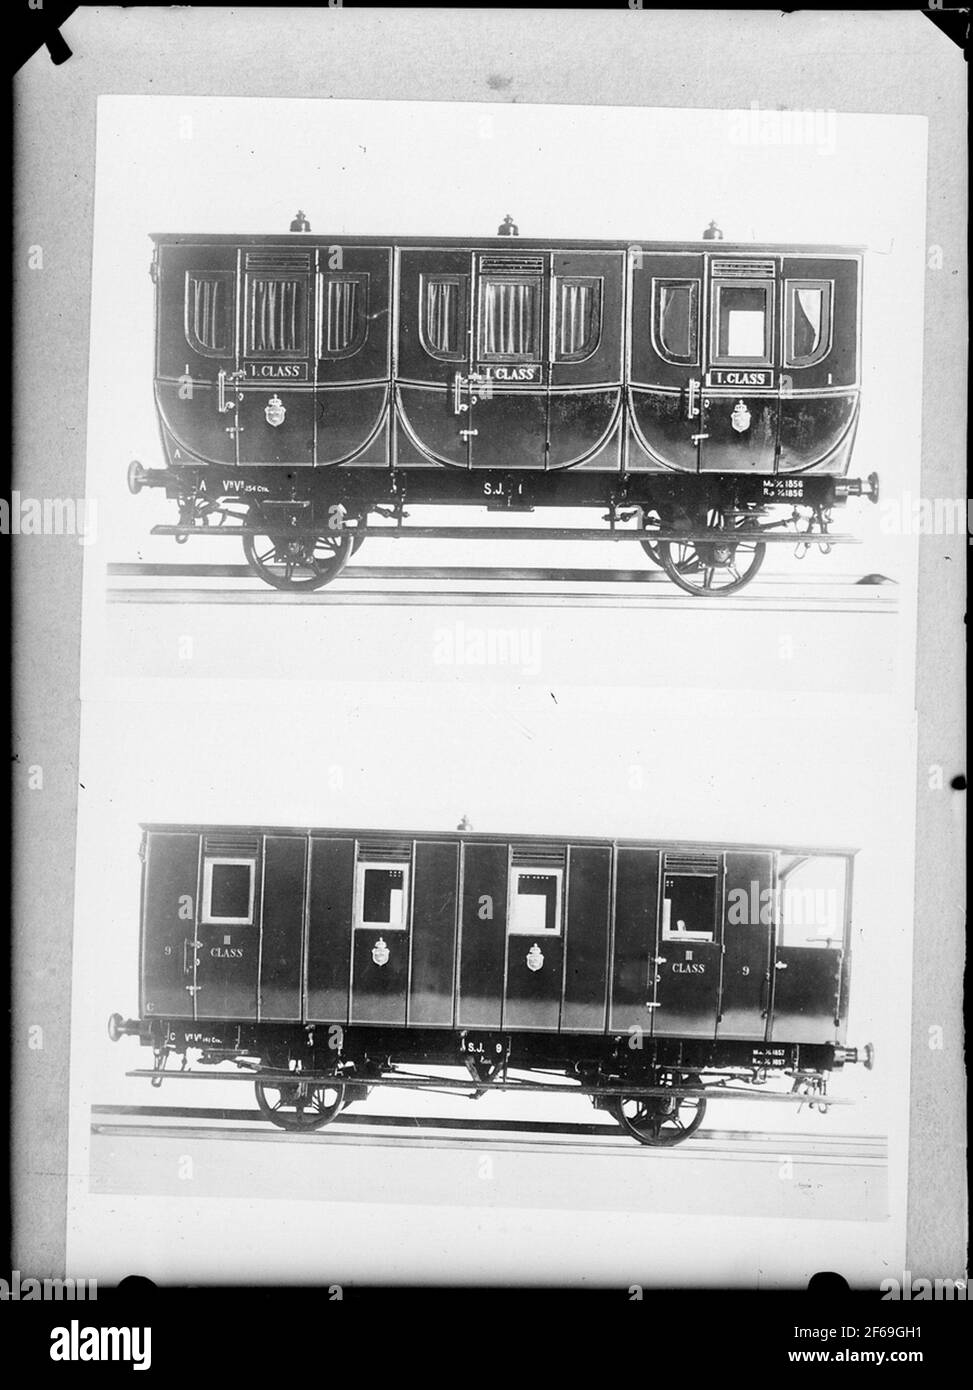 Eisenbahnmodelle Autos. Staatsbahnen, SJ A 1 (Klasse I) und SJ C 9 (Klasse III). Stockfoto